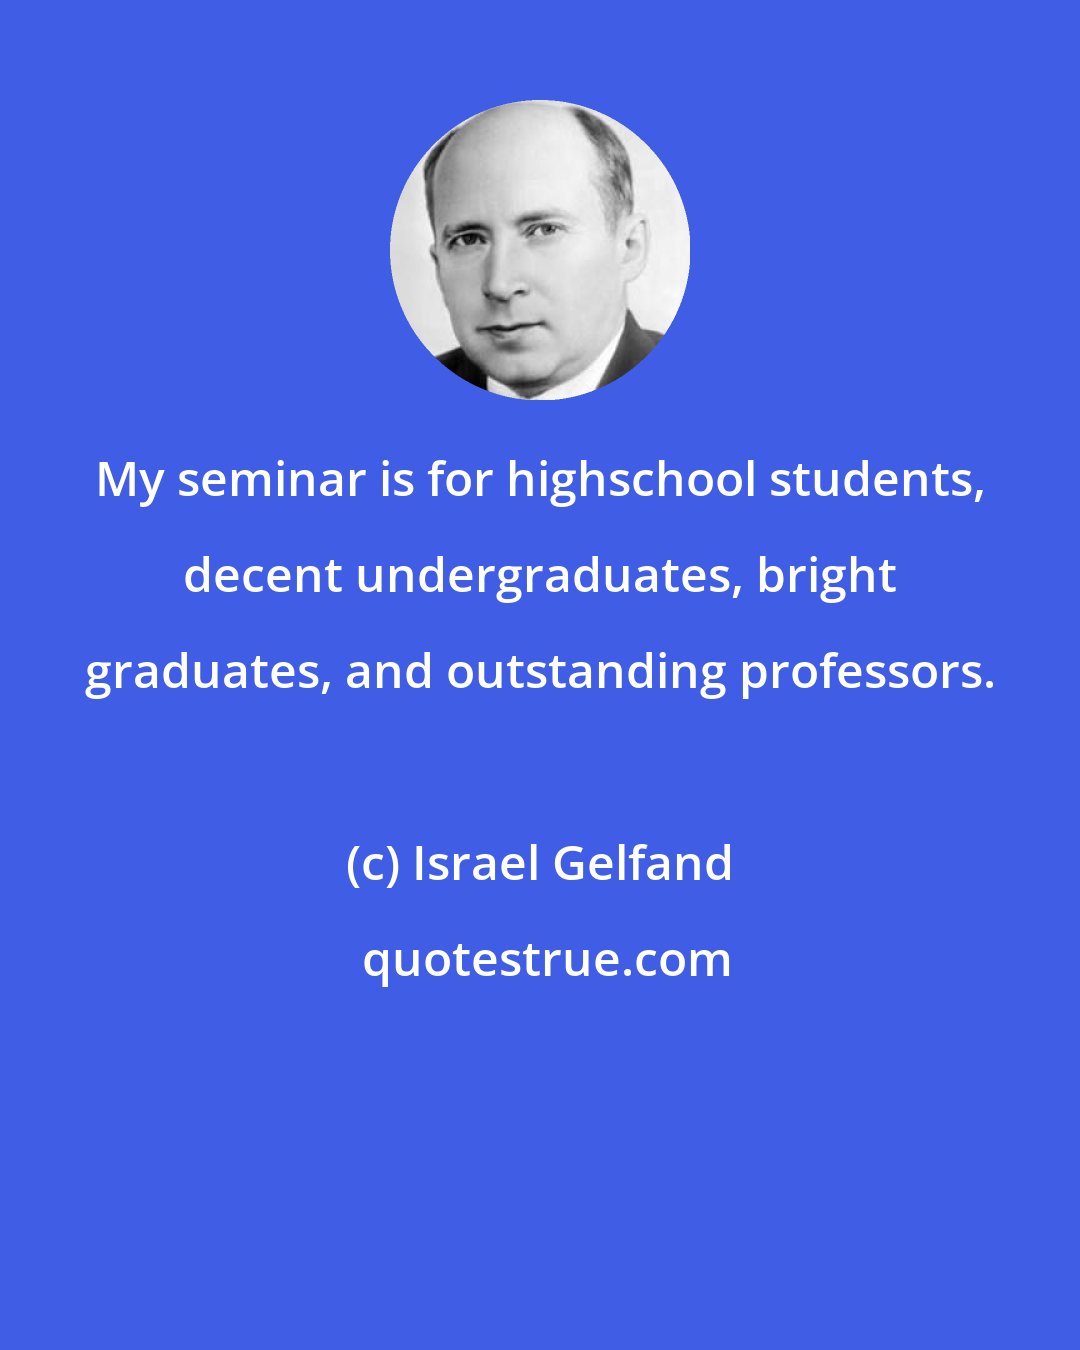 Israel Gelfand: My seminar is for highschool students, decent undergraduates, bright graduates, and outstanding professors.